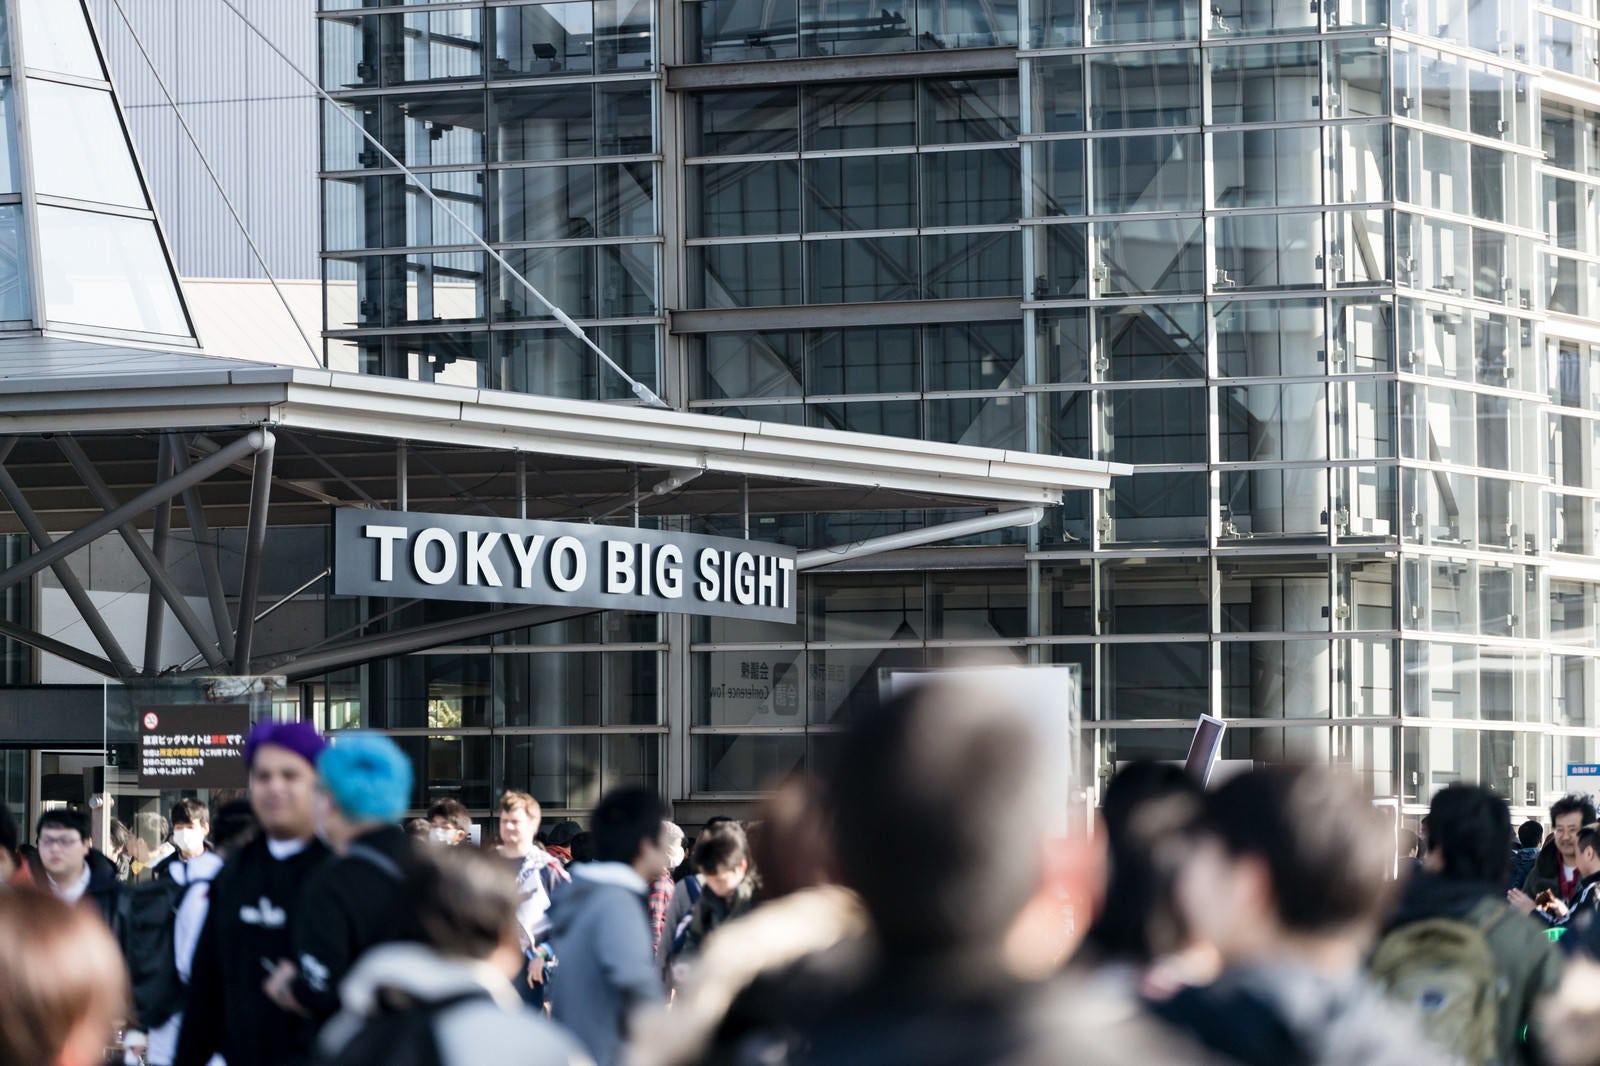 「TOKYO BIG SIGHT の入り口」の写真